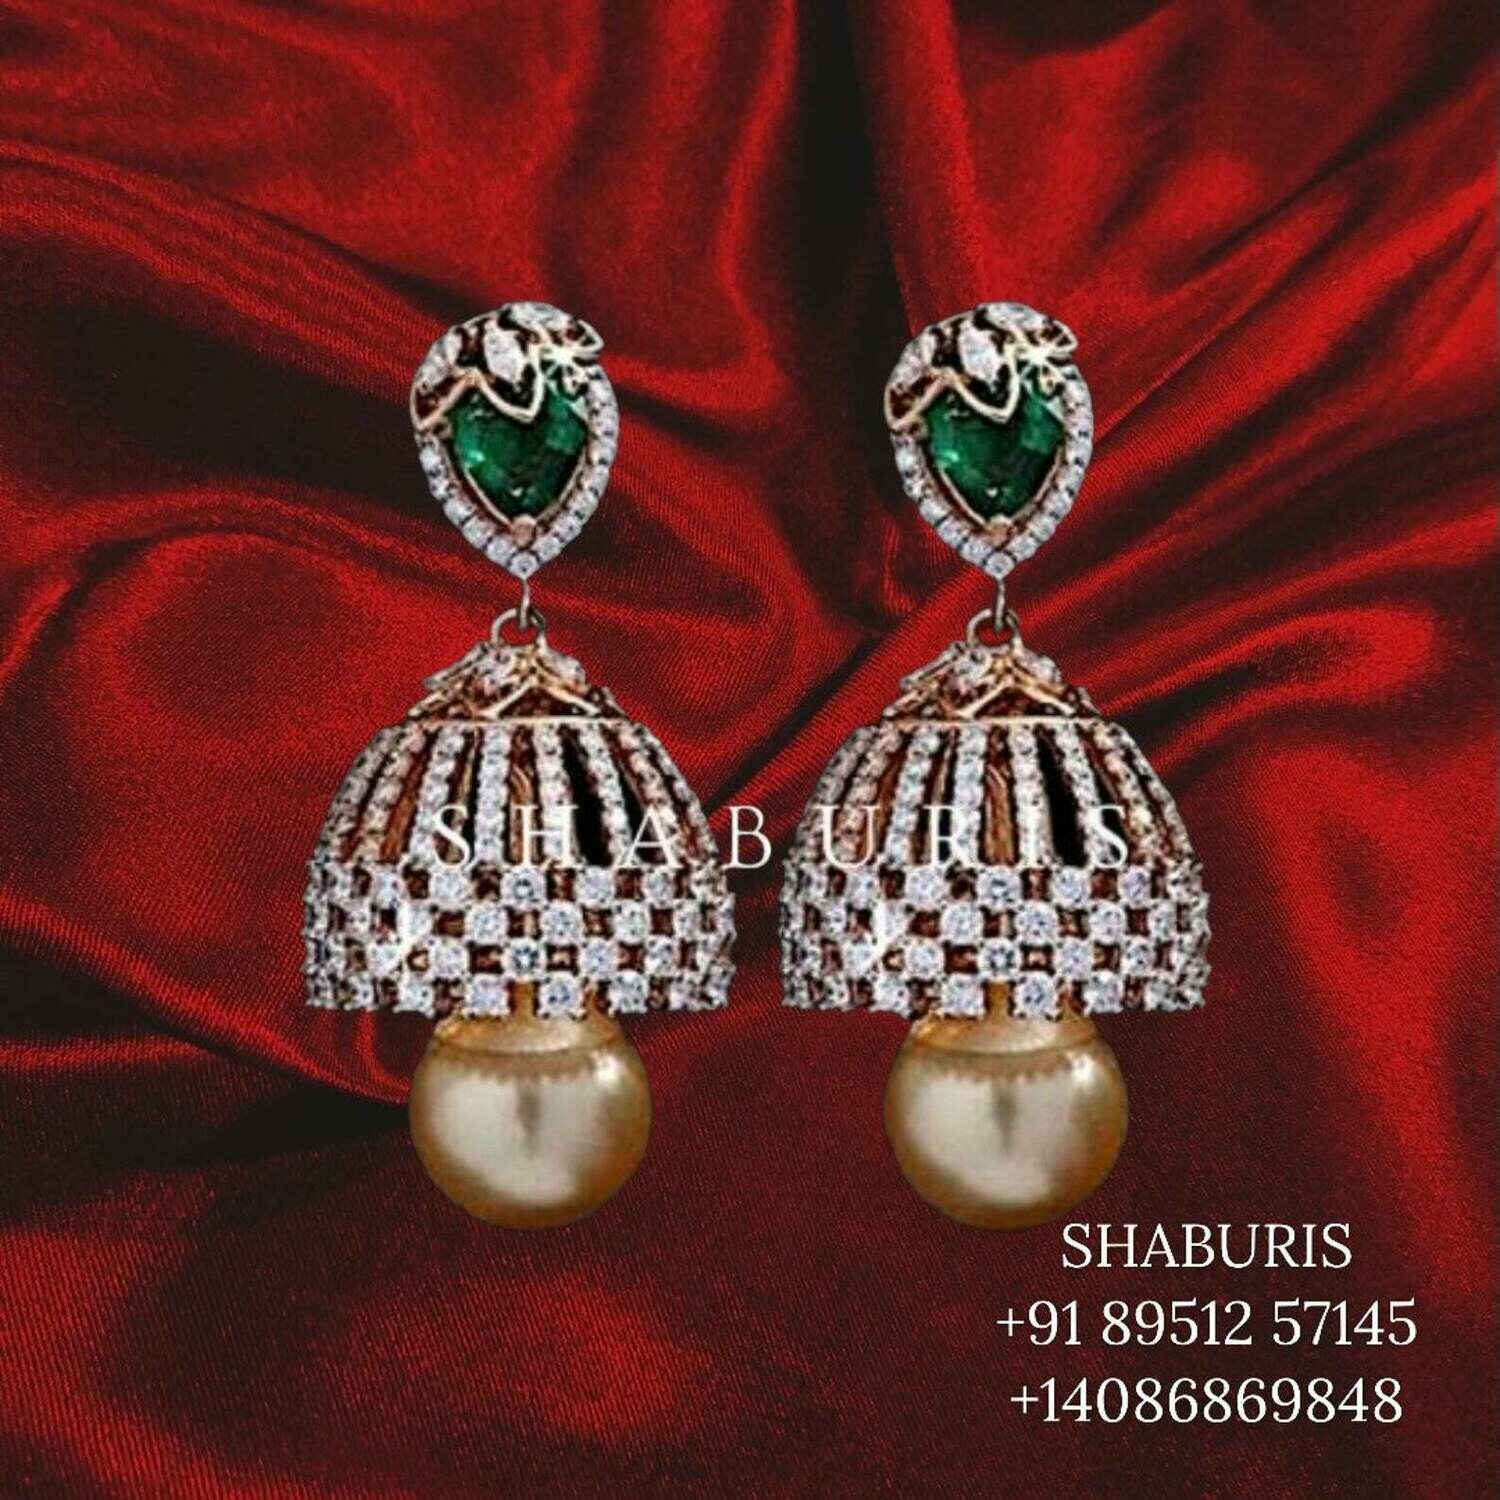 Diamond Jhumka,Pure Silver Jewelry Indian,Fashion Jewelry in Silver,Indian Earrings,Indian Jewelry,High End Jewelry-NIHIRA-SHABURIS